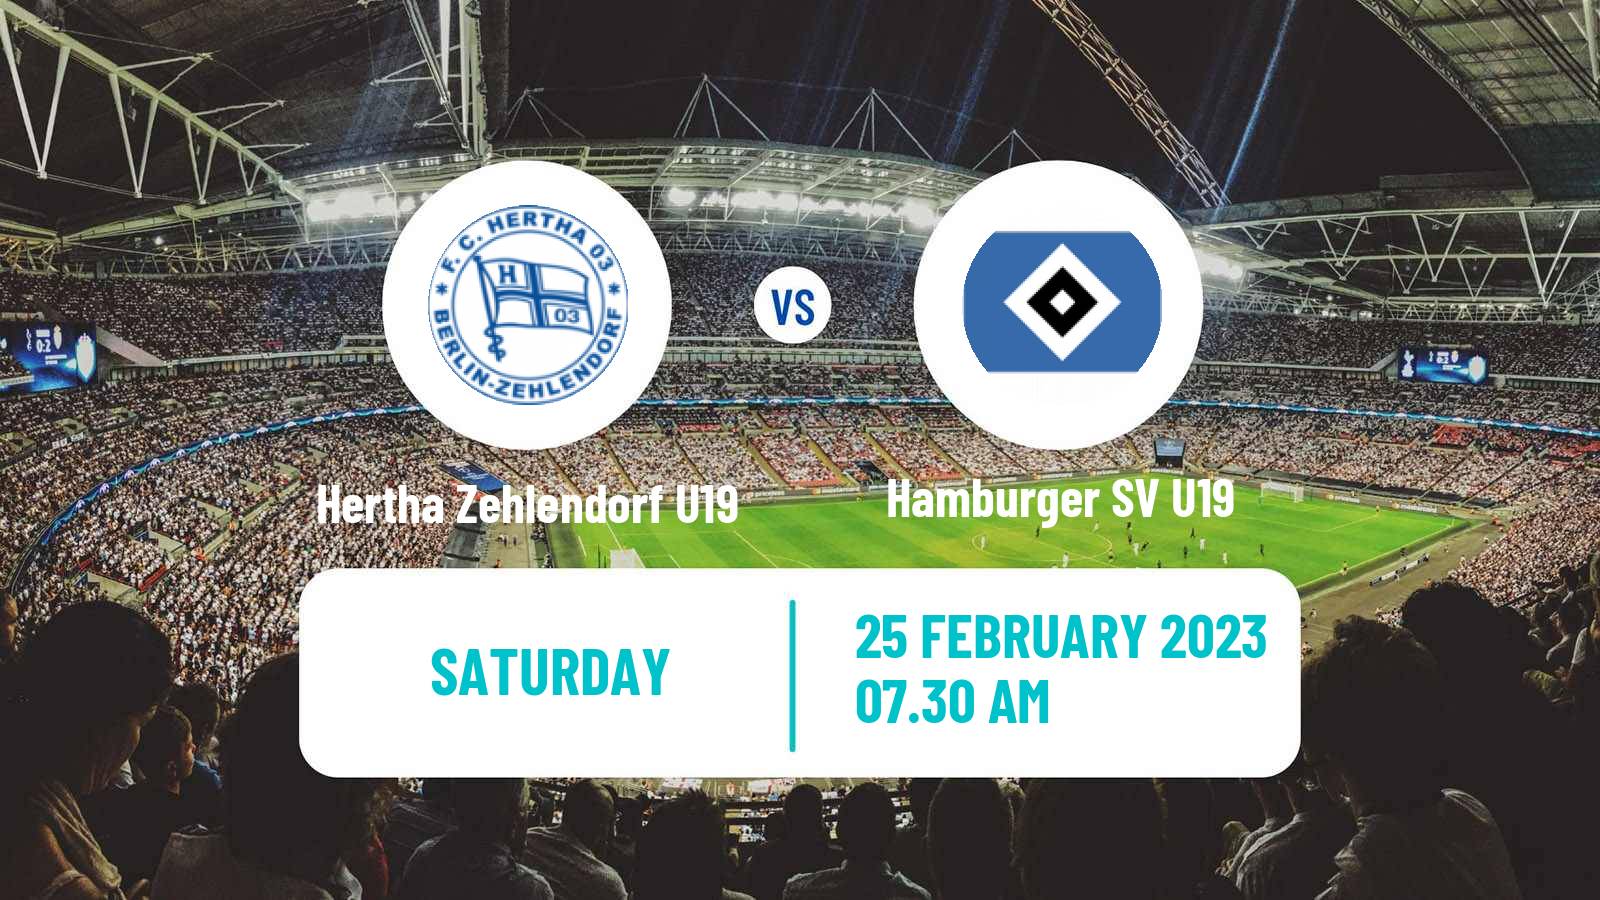 Soccer German Junioren Bundesliga North Hertha Zehlendorf U19 - Hamburger SV U19